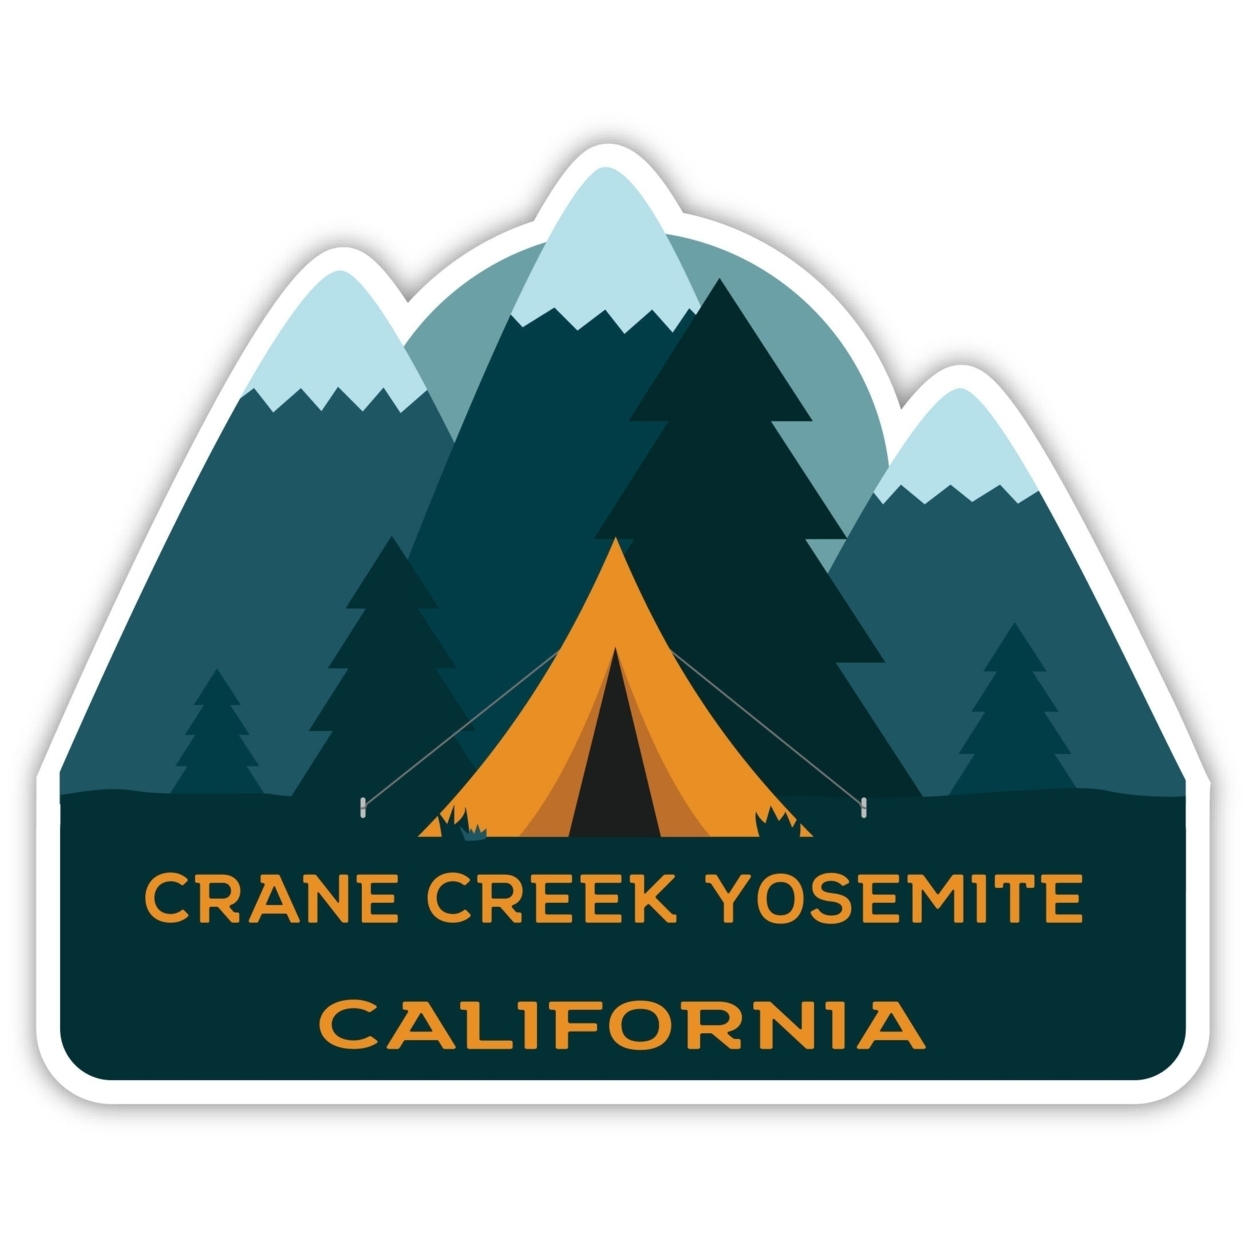 Crane Creek Yosemite California Souvenir Decorative Stickers (Choose Theme And Size) - 4-Pack, 4-Inch, Tent